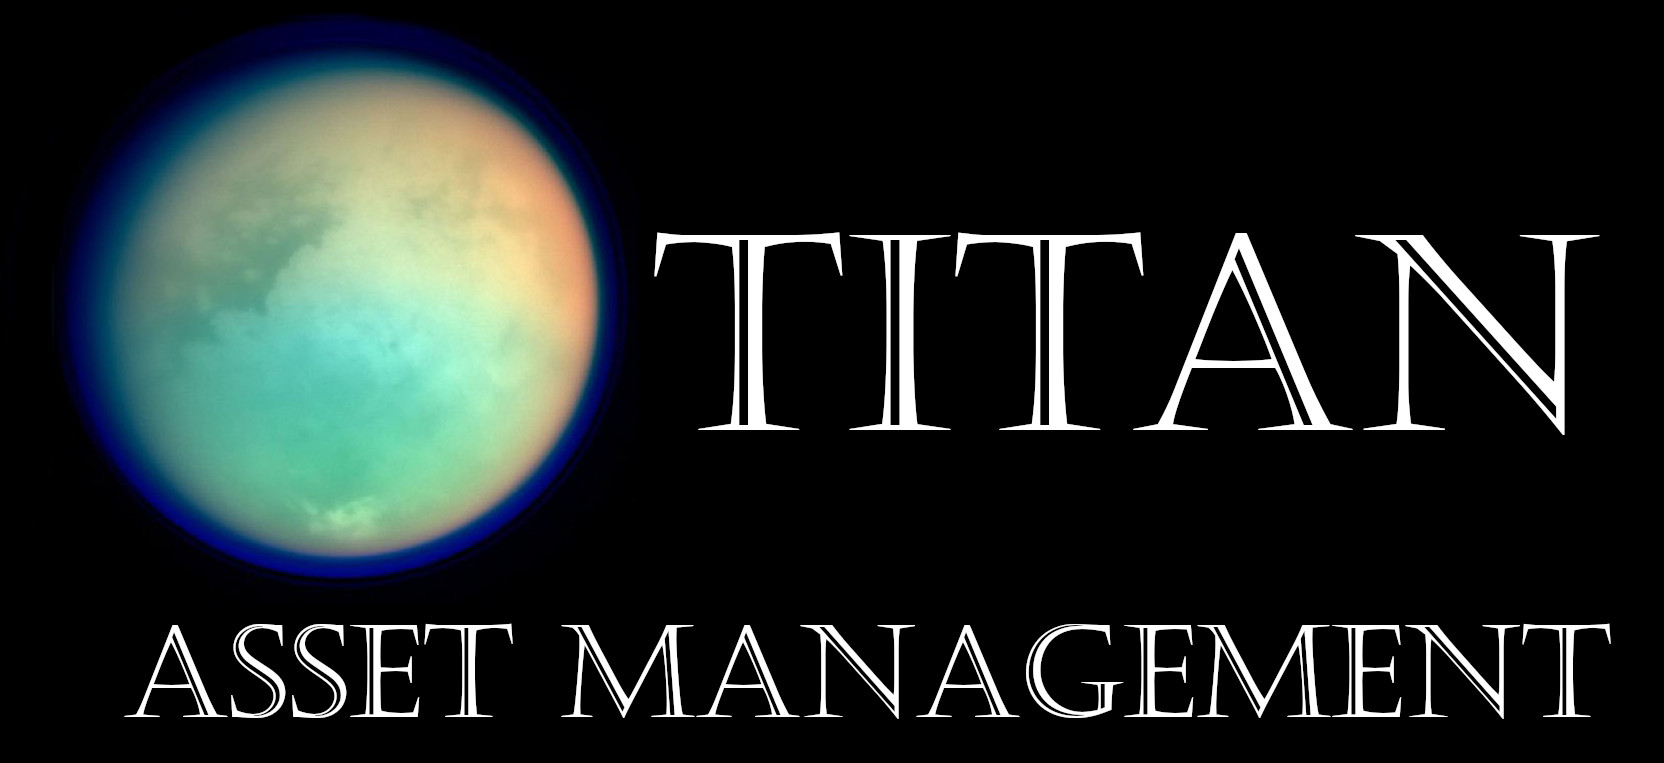 Titan as seen from Cassini